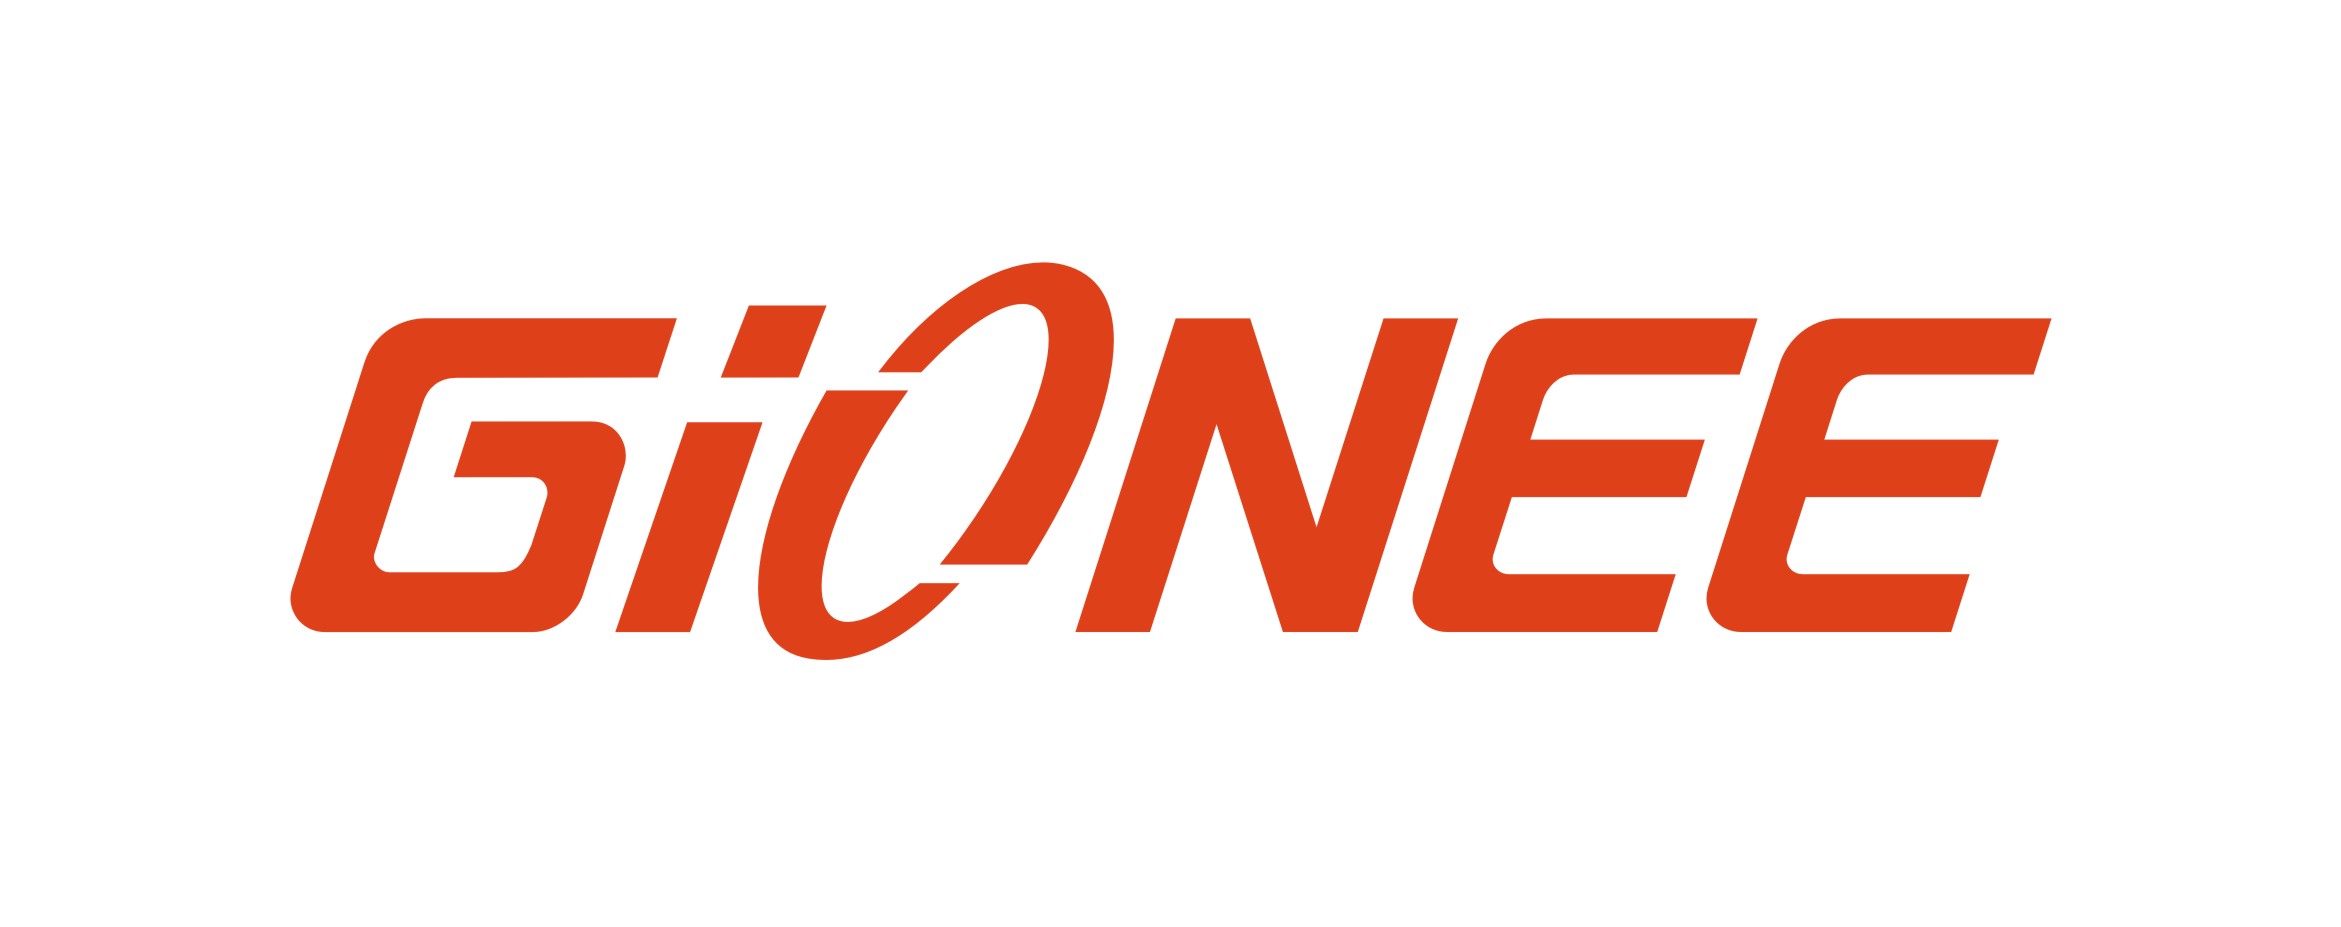 gionee mobile Logo photo - 1